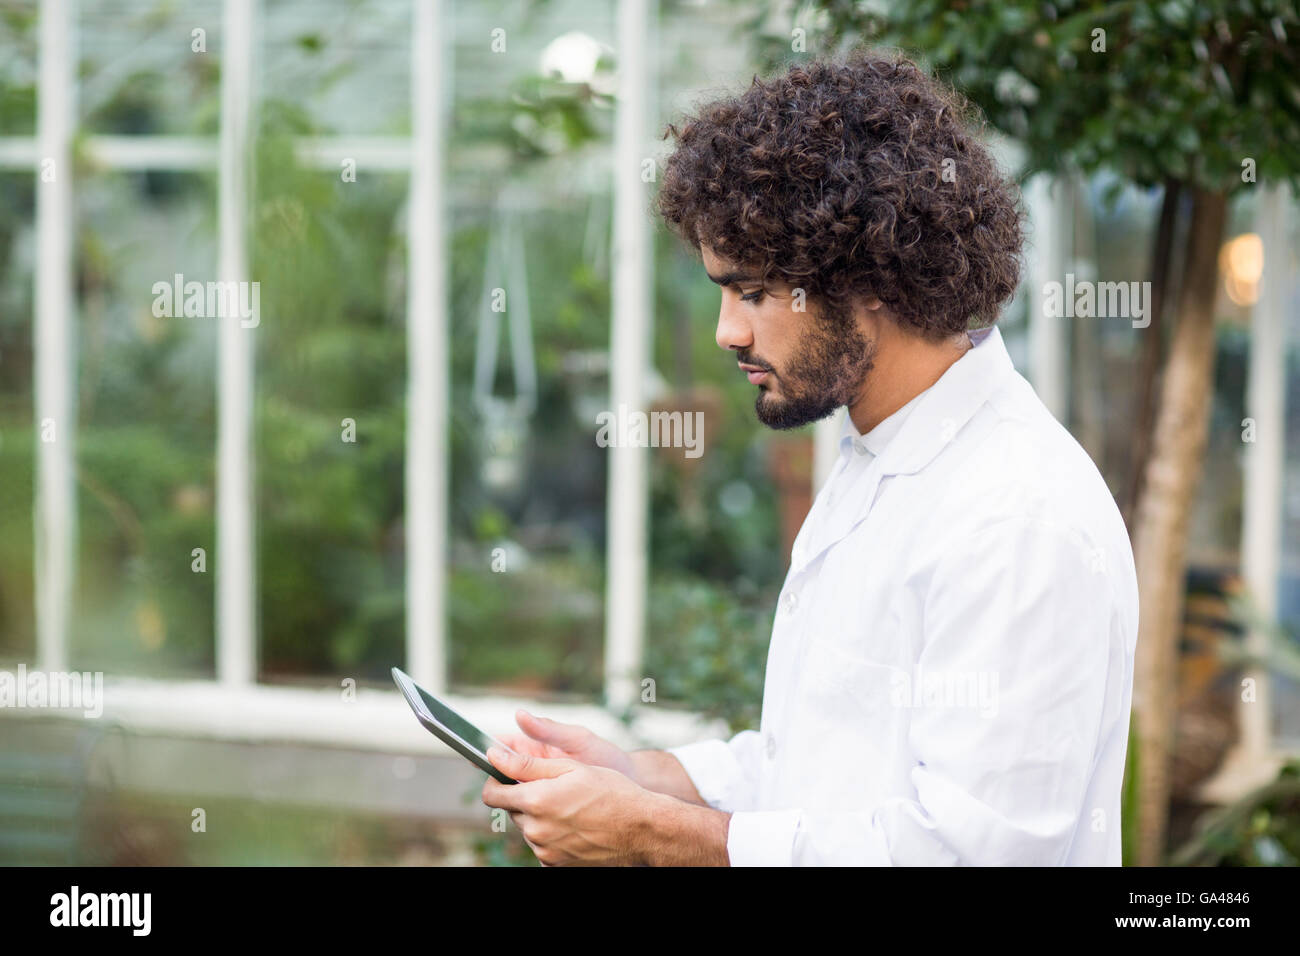 Male scientist using digital tablet Stock Photo